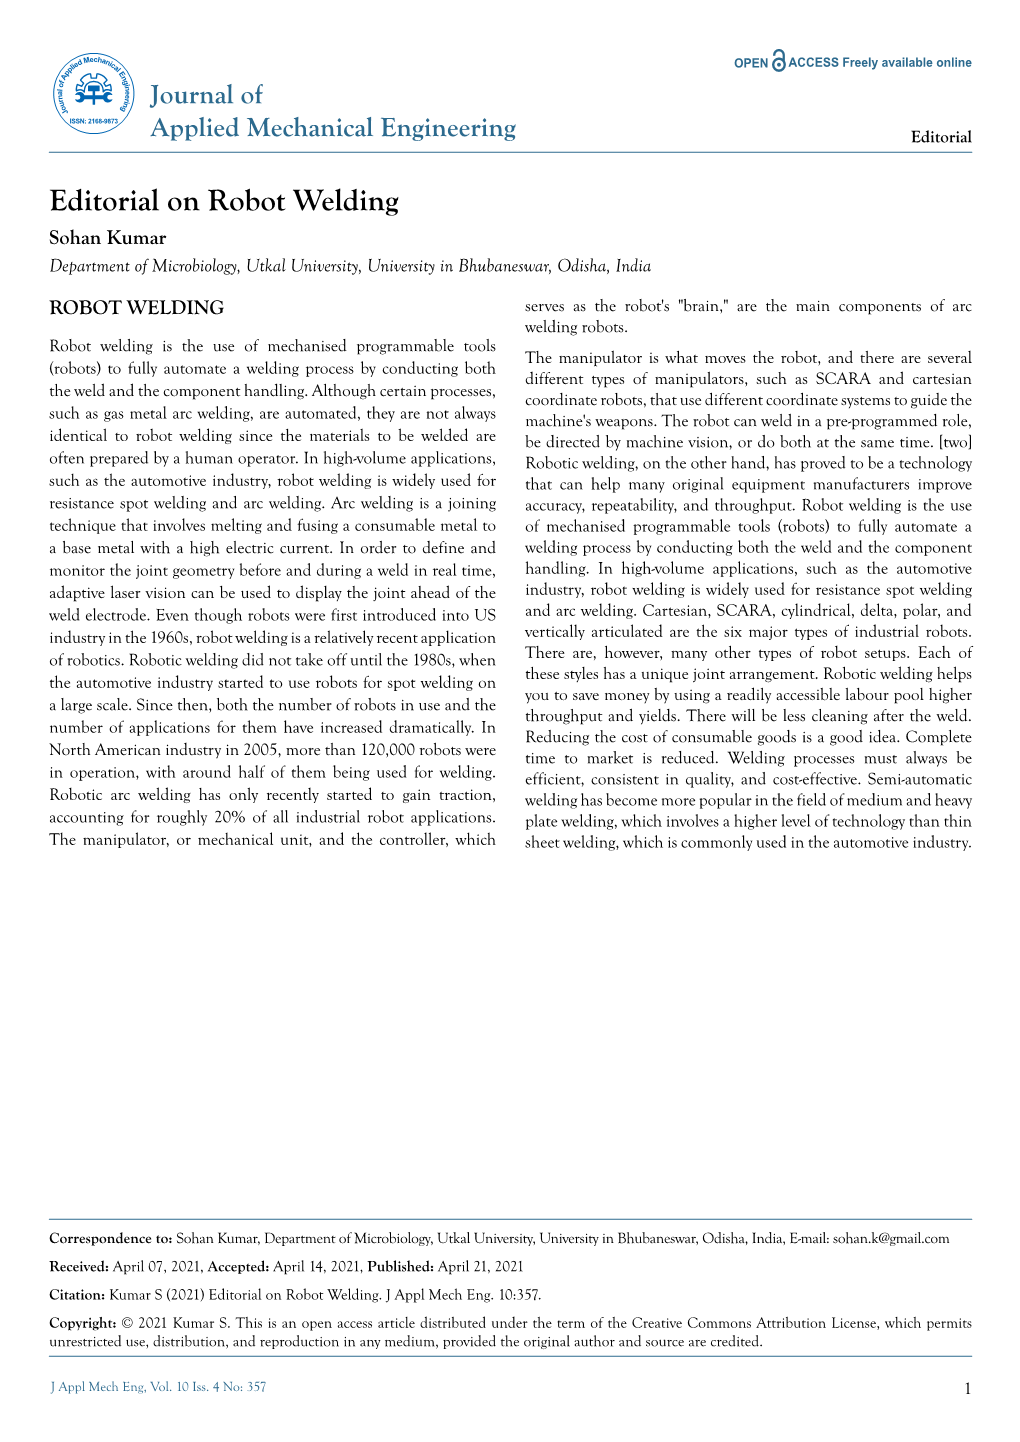 Editorial on Robot Welding Sohan Kumar Department of Microbiology, Utkal University, University in Bhubaneswar, Odisha, India